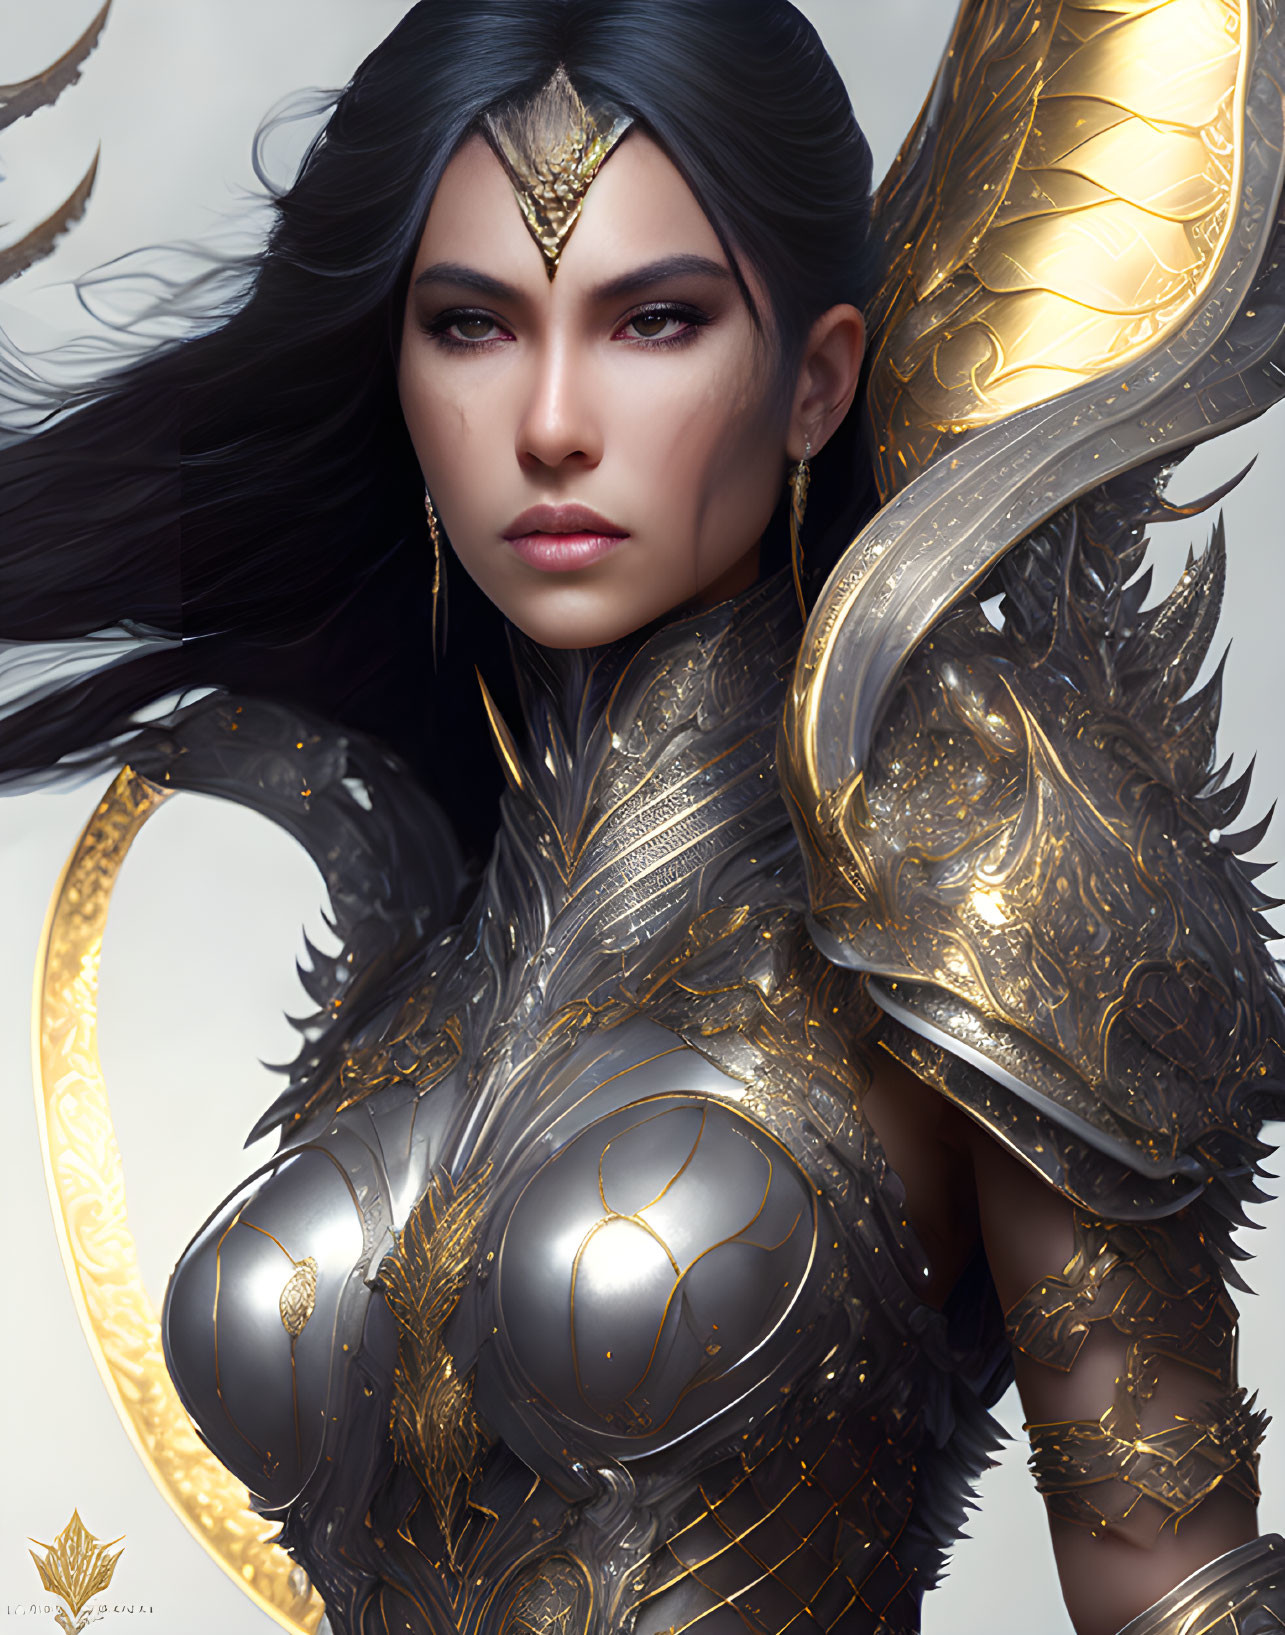 Digital artwork: Woman in black hair, golden-trimmed armor, focused expression